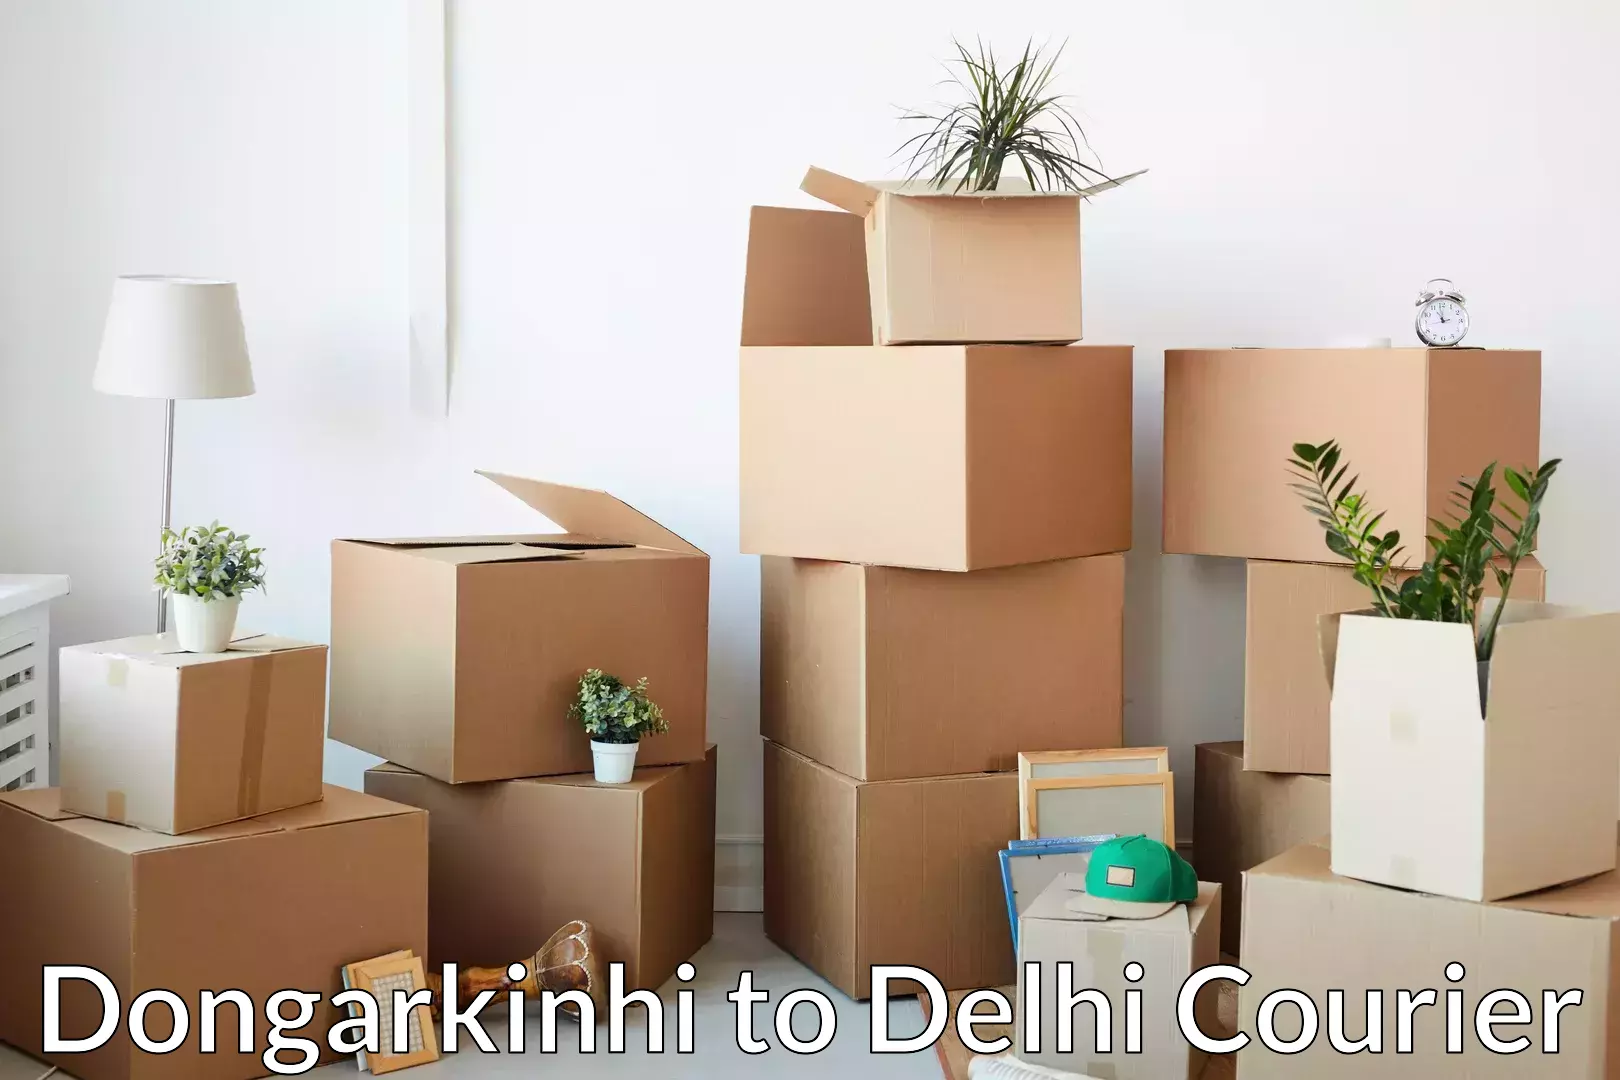 Professional moving company Dongarkinhi to University of Delhi